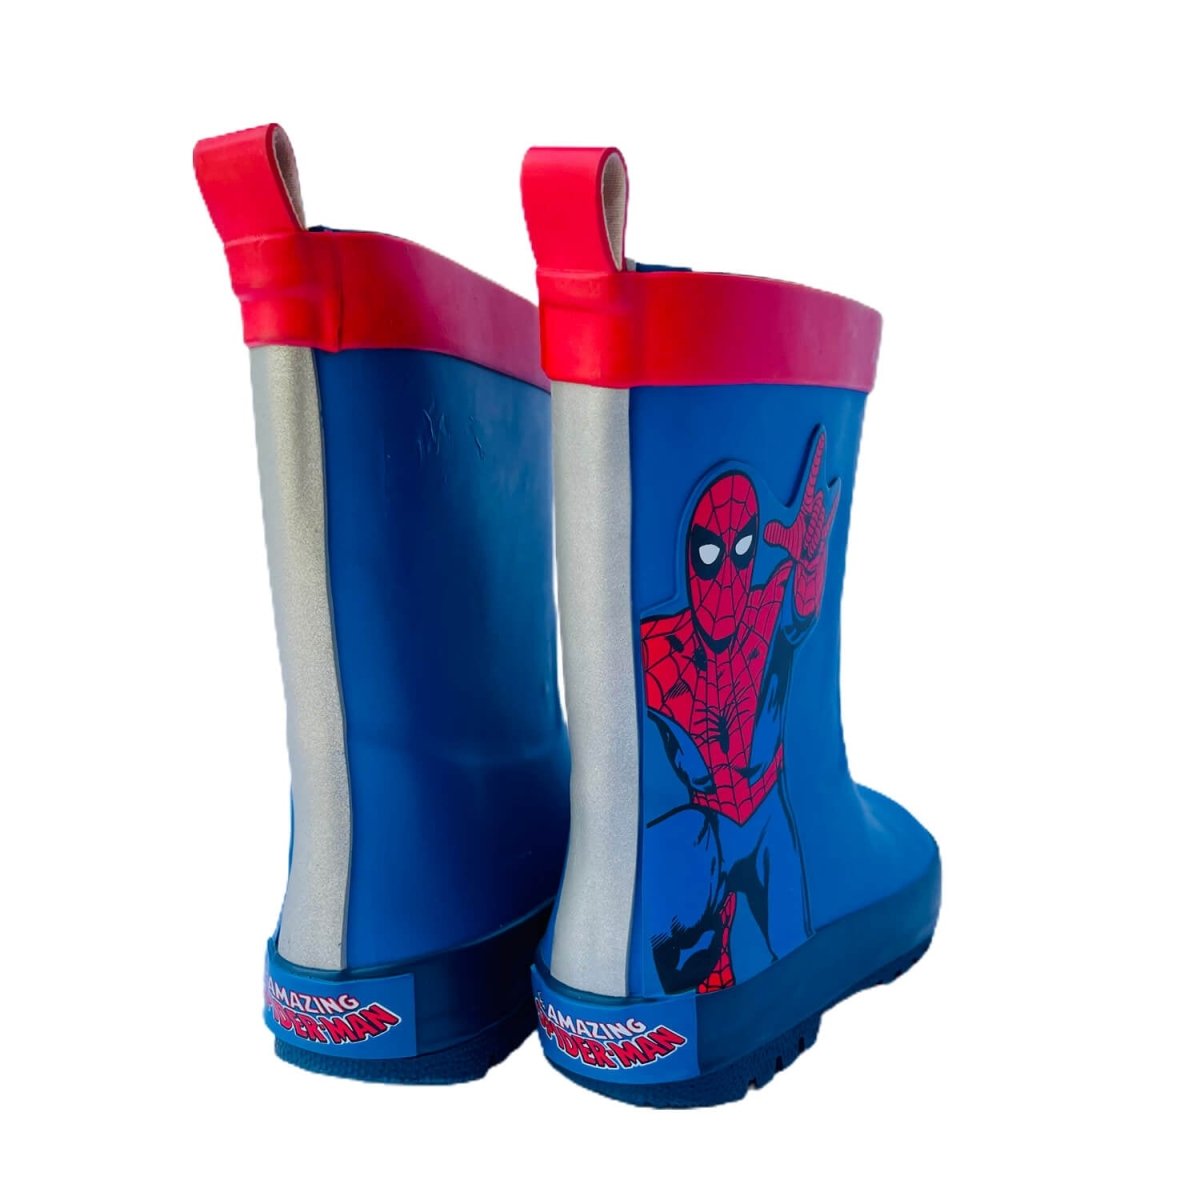 Master Webster Waterproof Flexible Rubber Rain Gumboots for Kids - Little Surprise BoxMaster Webster Waterproof Flexible Rubber Rain Gumboots for Kids